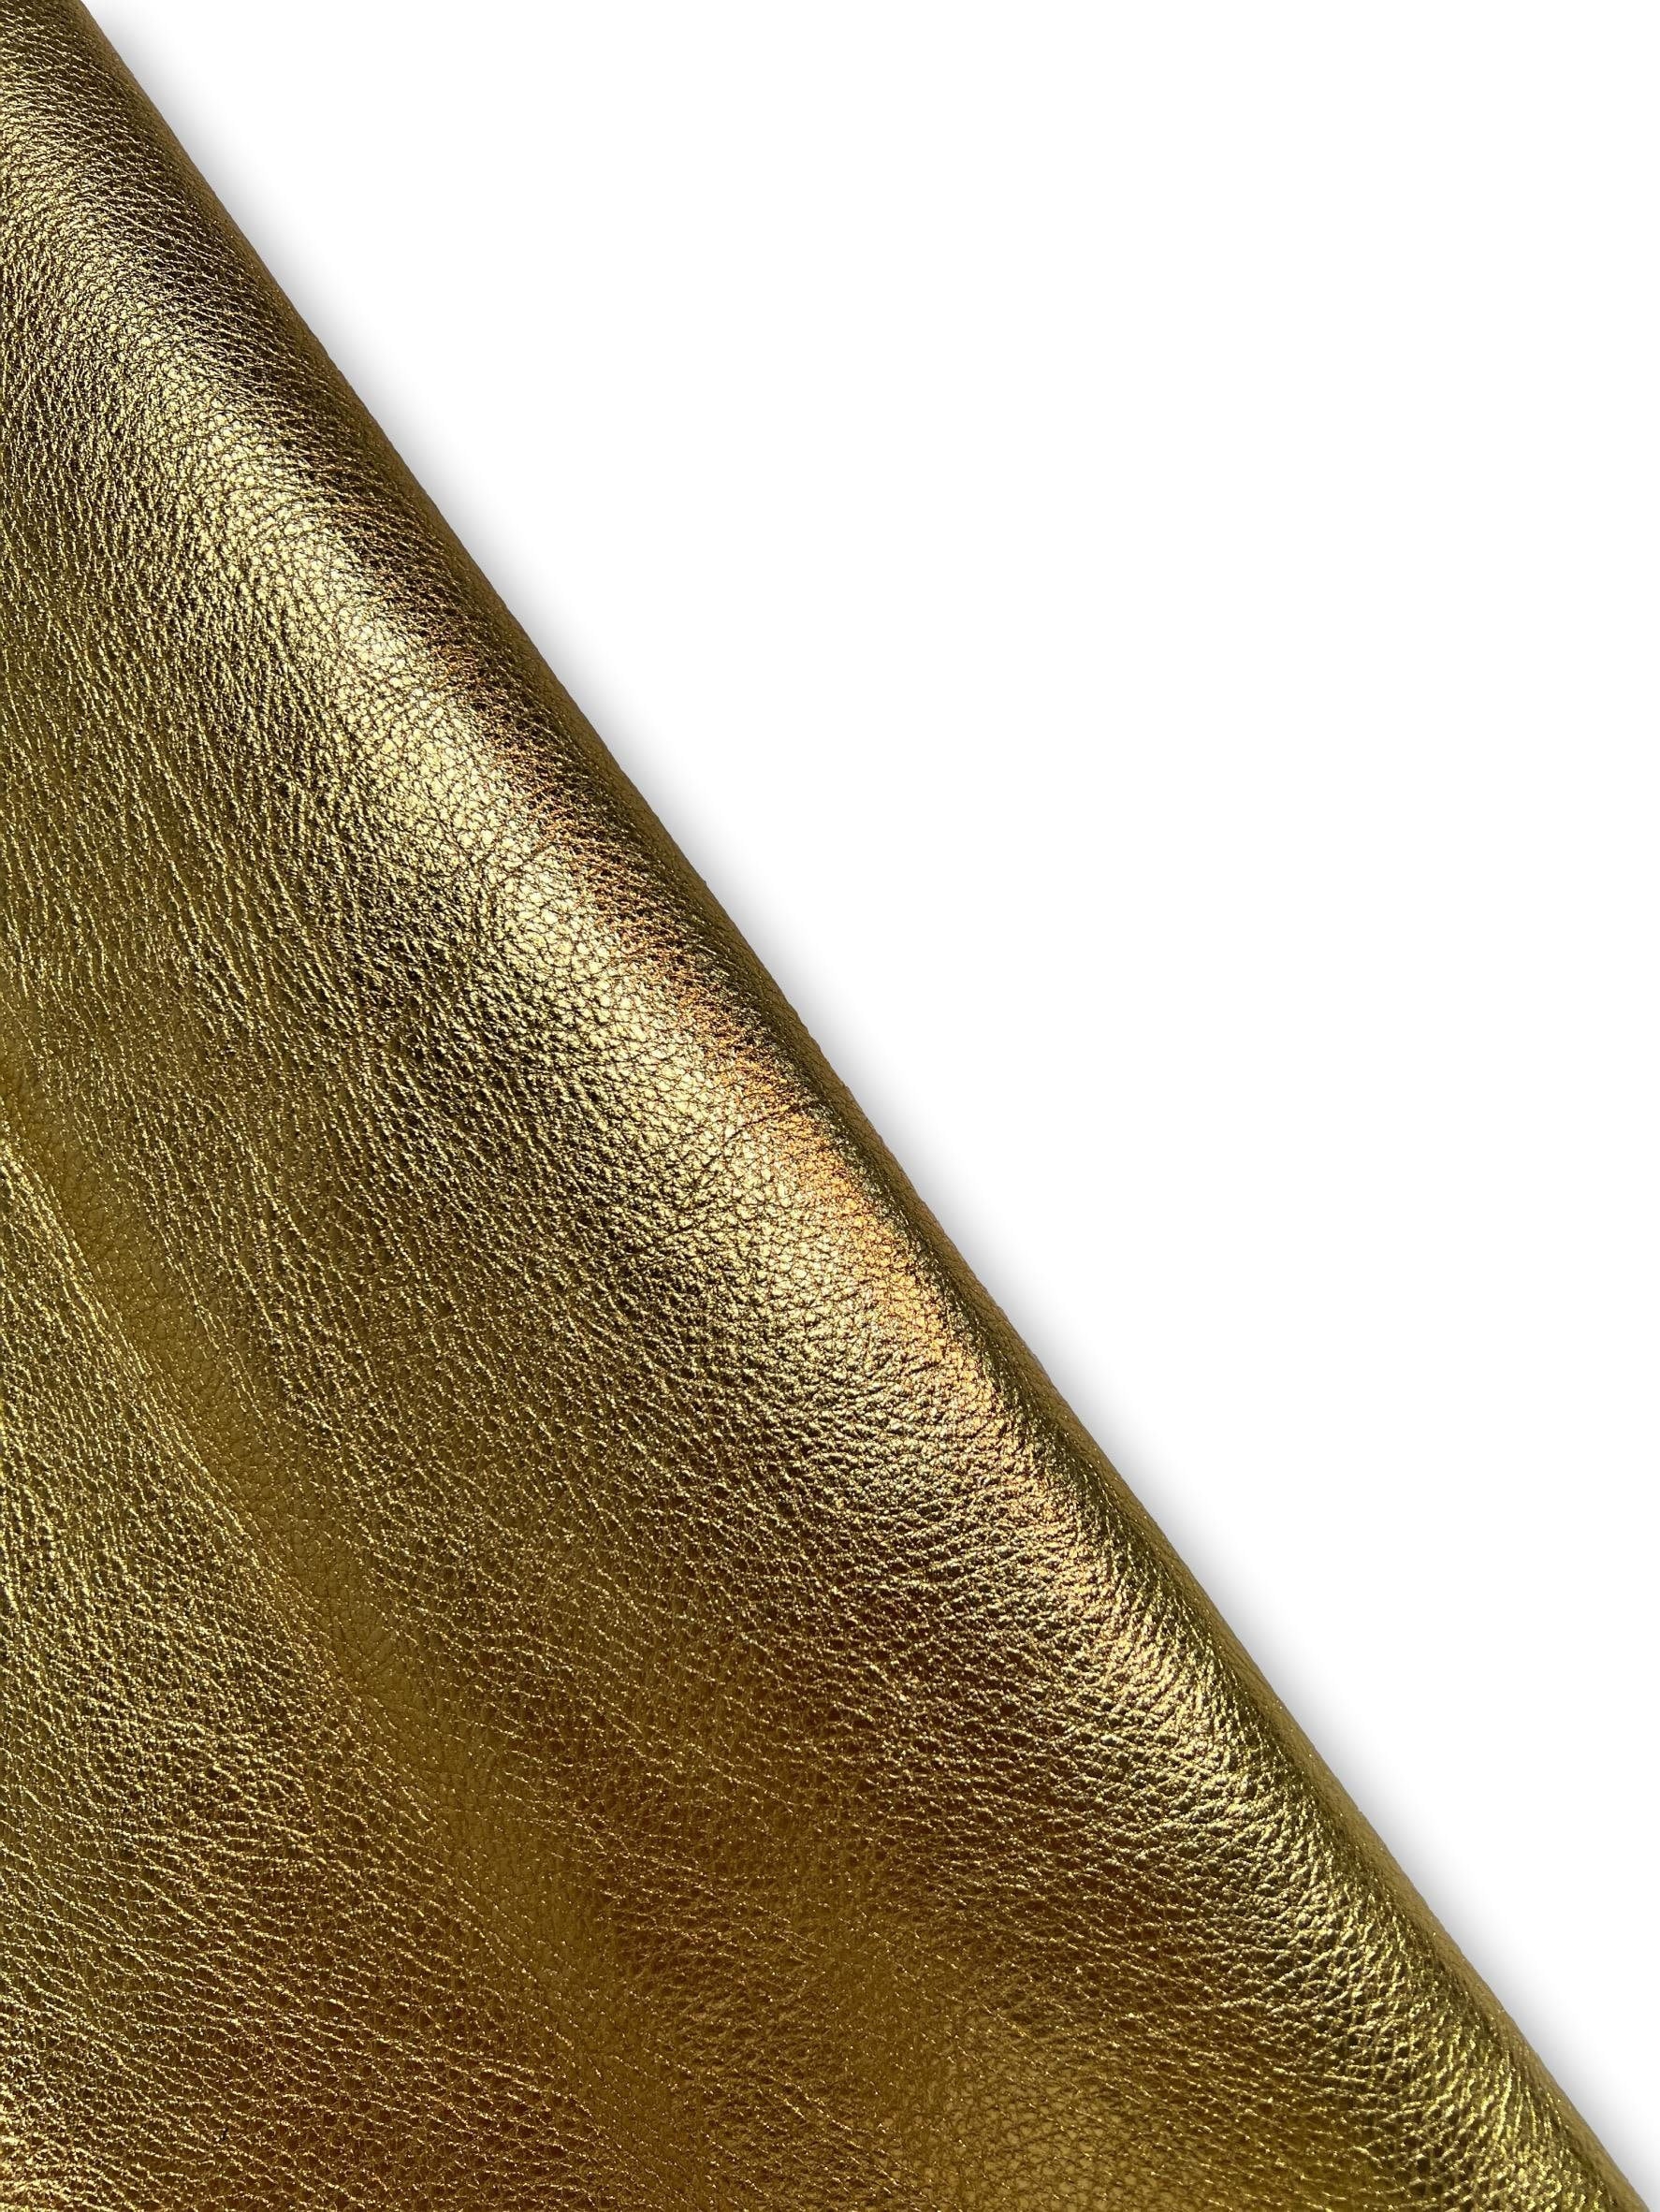 4 Feet Dog Leash  White Gold Metallic Goatskin Leather – Graphic Image